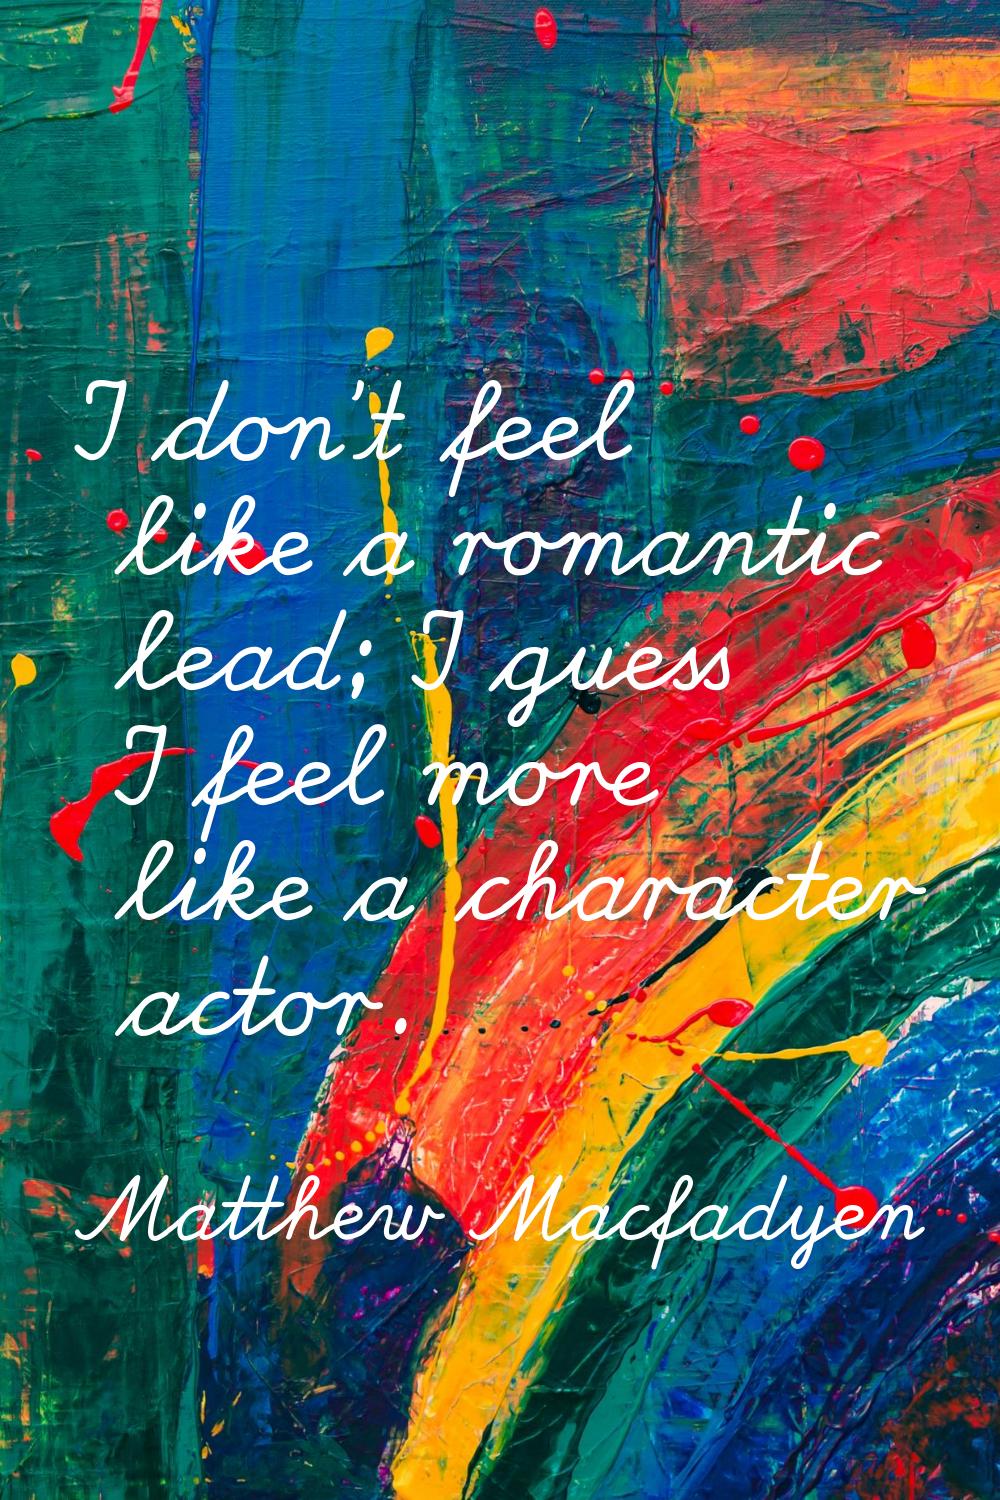 I don't feel like a romantic lead; I guess I feel more like a character actor.